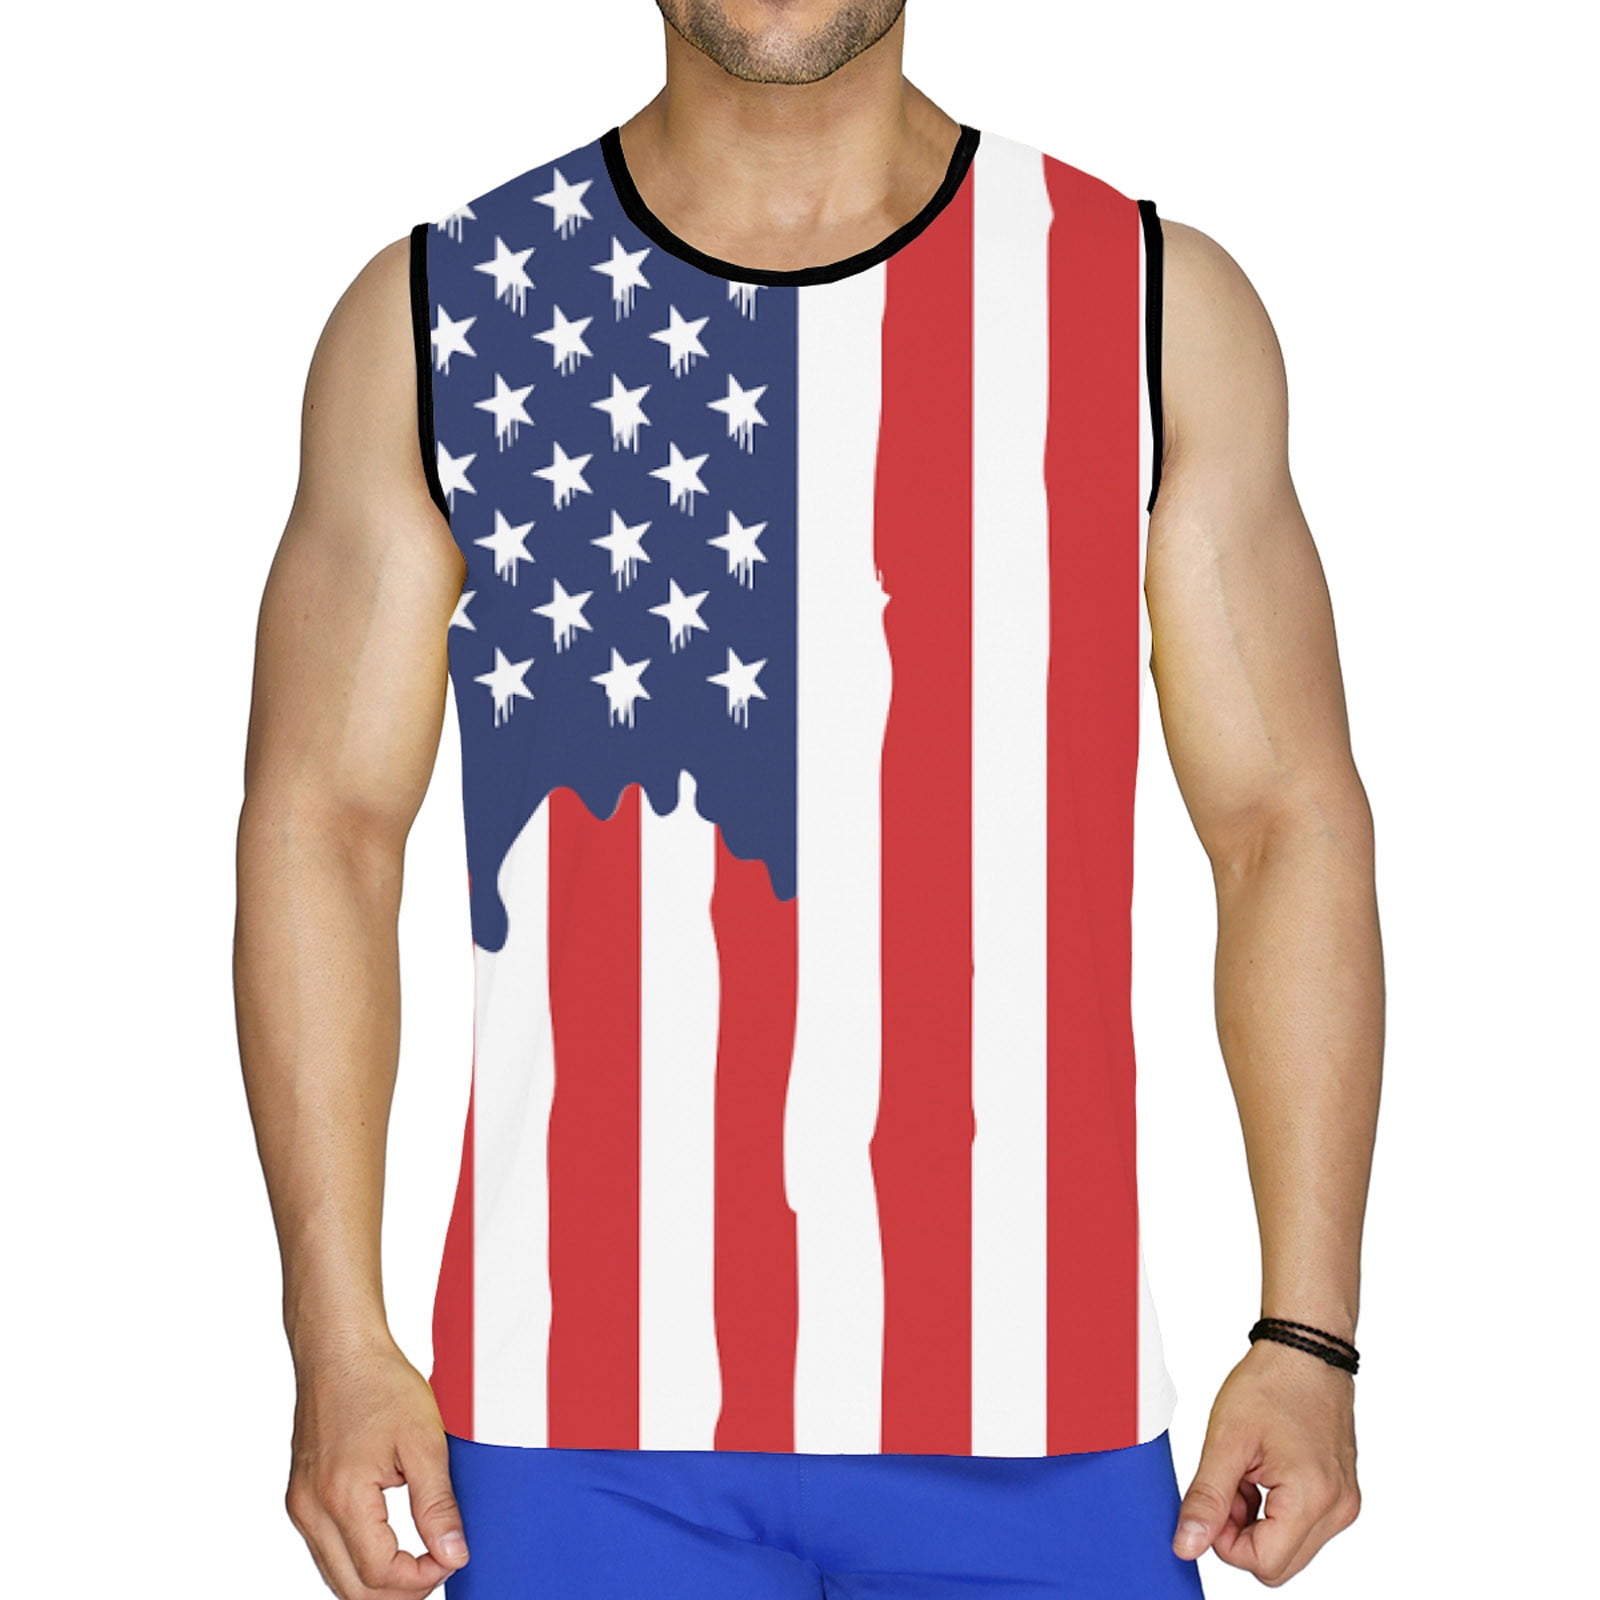 Men's Sleeveless Workout Shirts,American Flag Muscle T-Shirt for Men ...